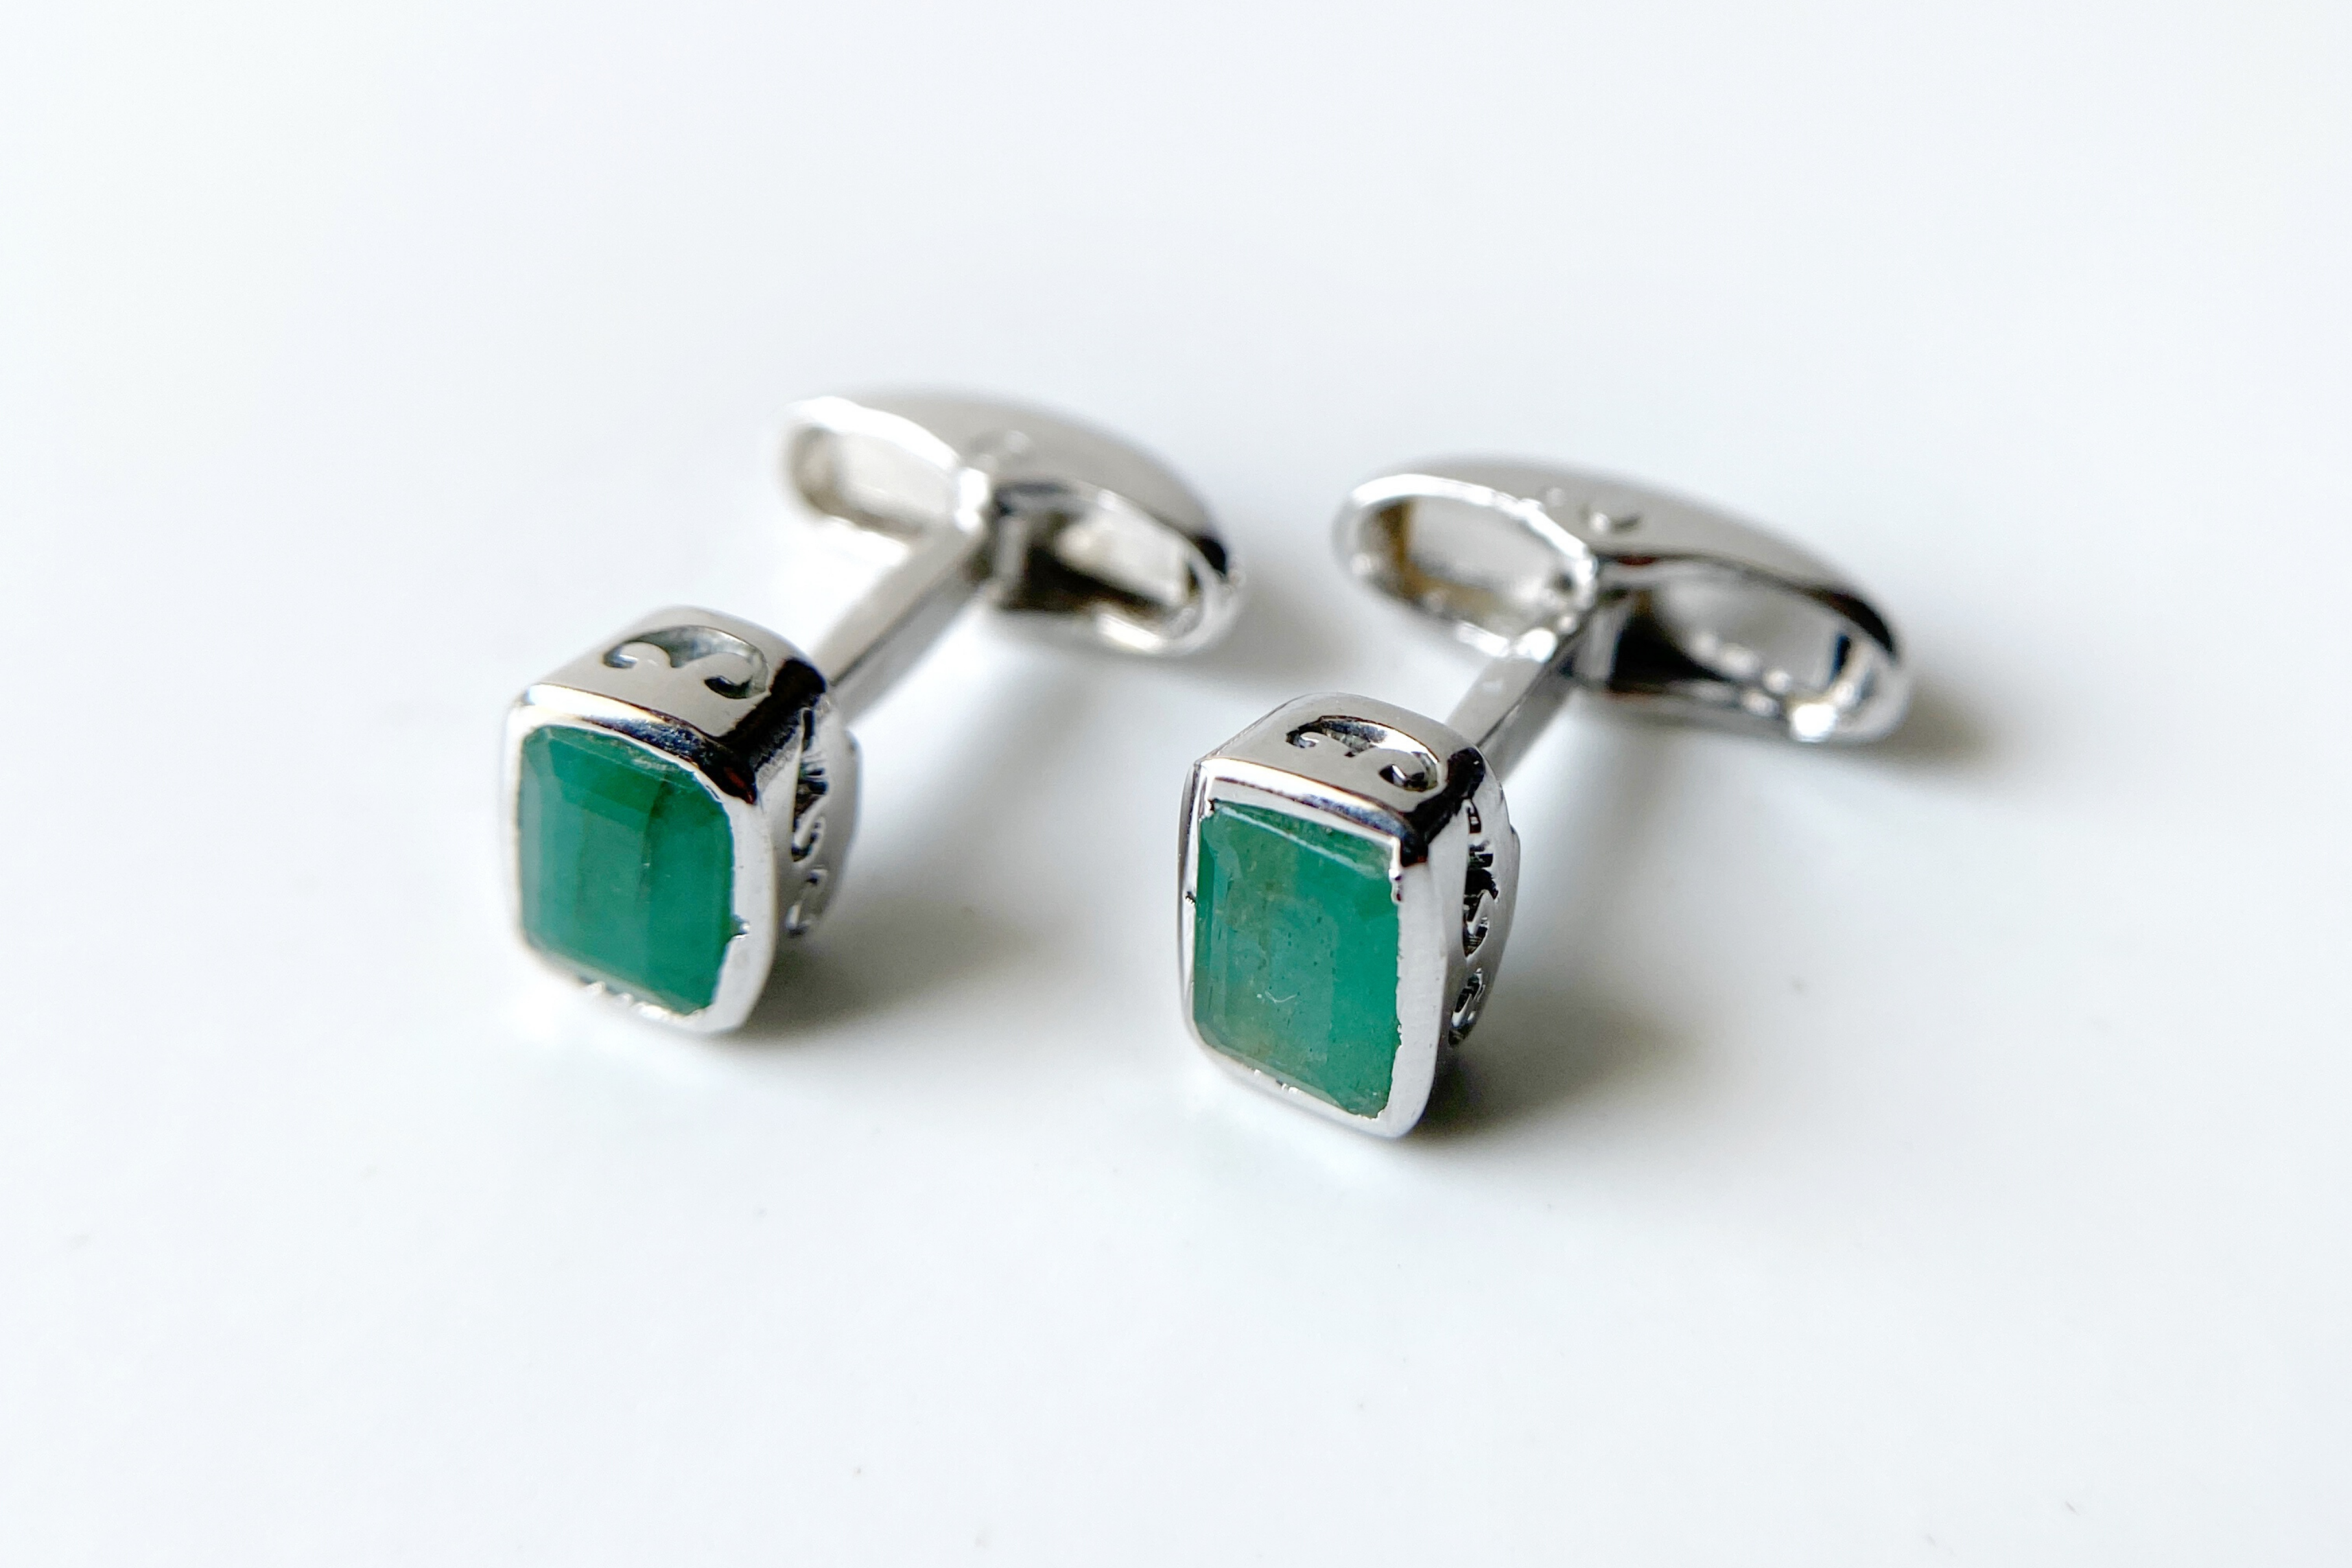 Emerald stone cuff links